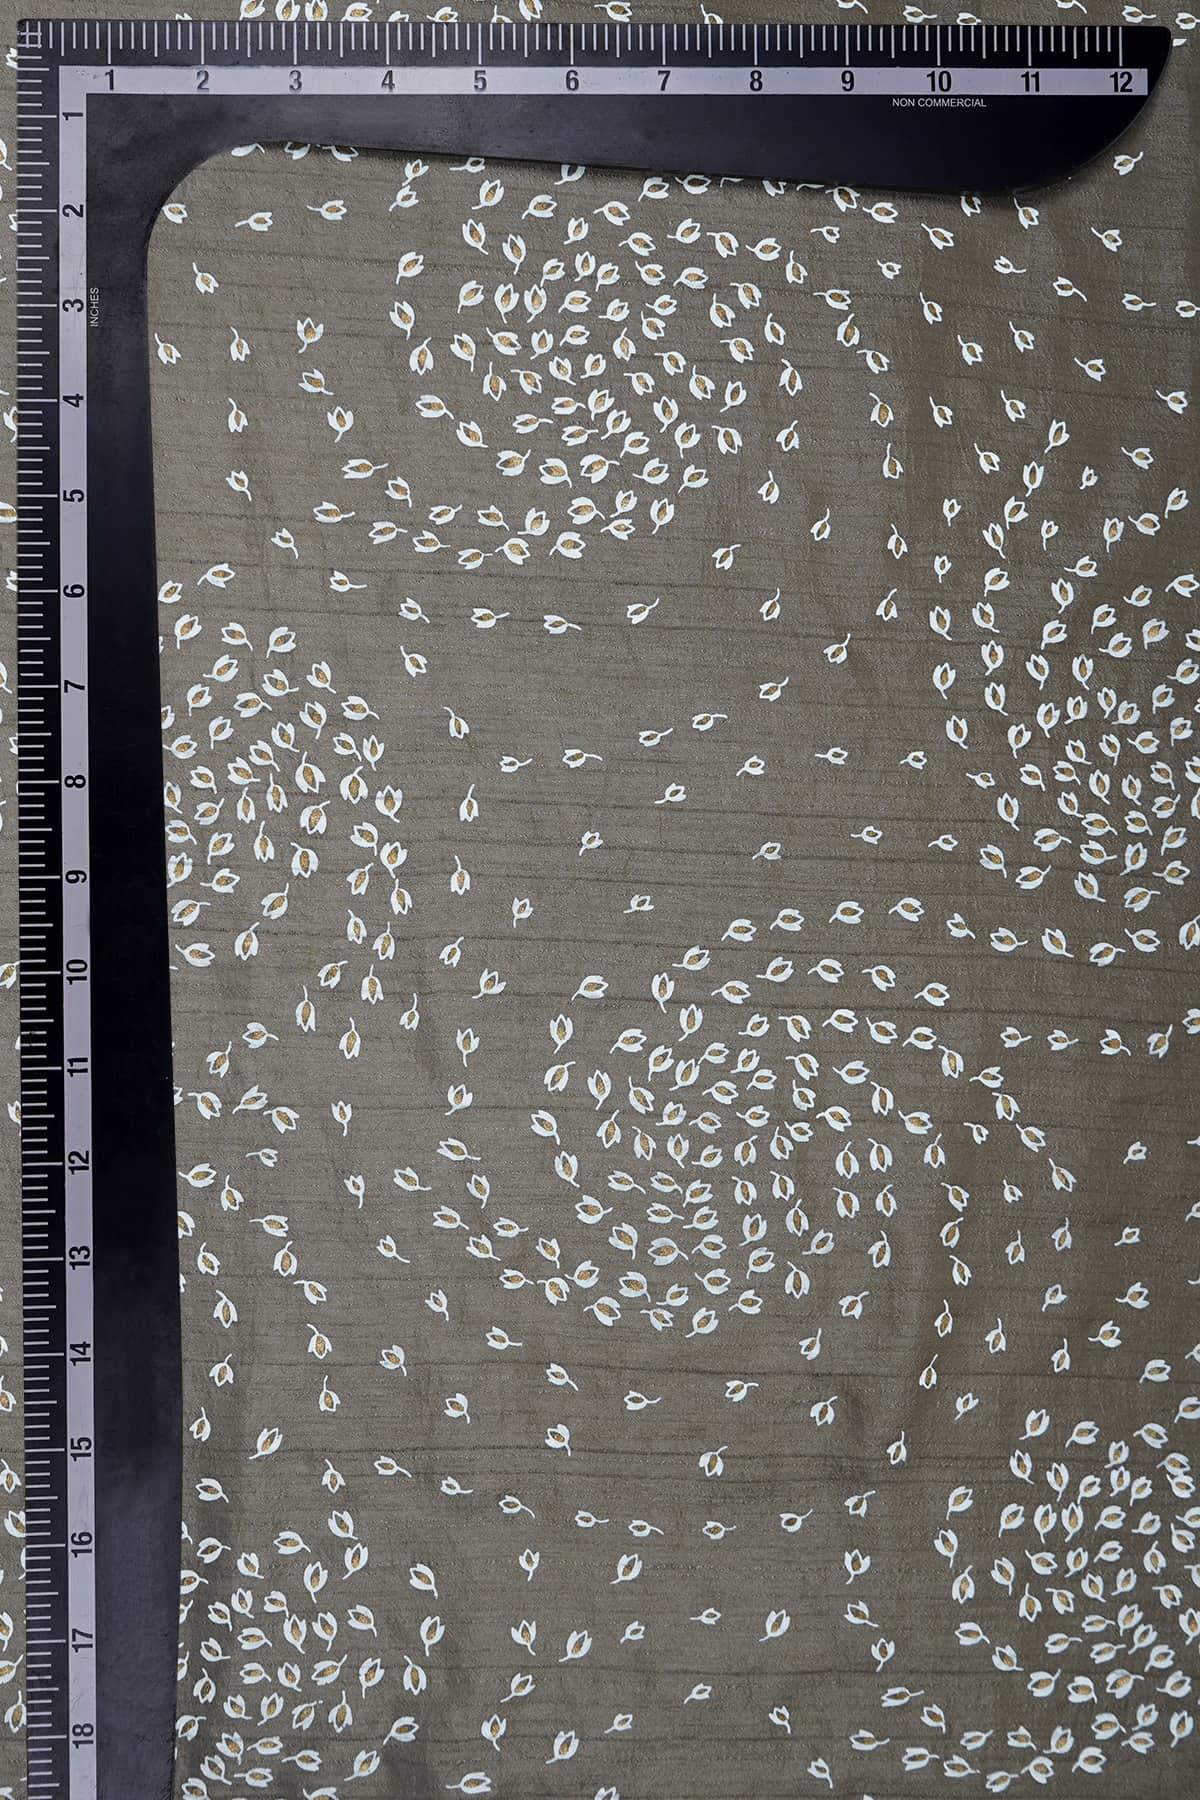 Spiral Floral Screen Print on Friar Grey Alina Silk - saraaha.com - Accessories, Alina silk, Festive, Formal, Kurtas, Kurtis, SILK, Skirts, Suits, Tops Dresses, Trimmings